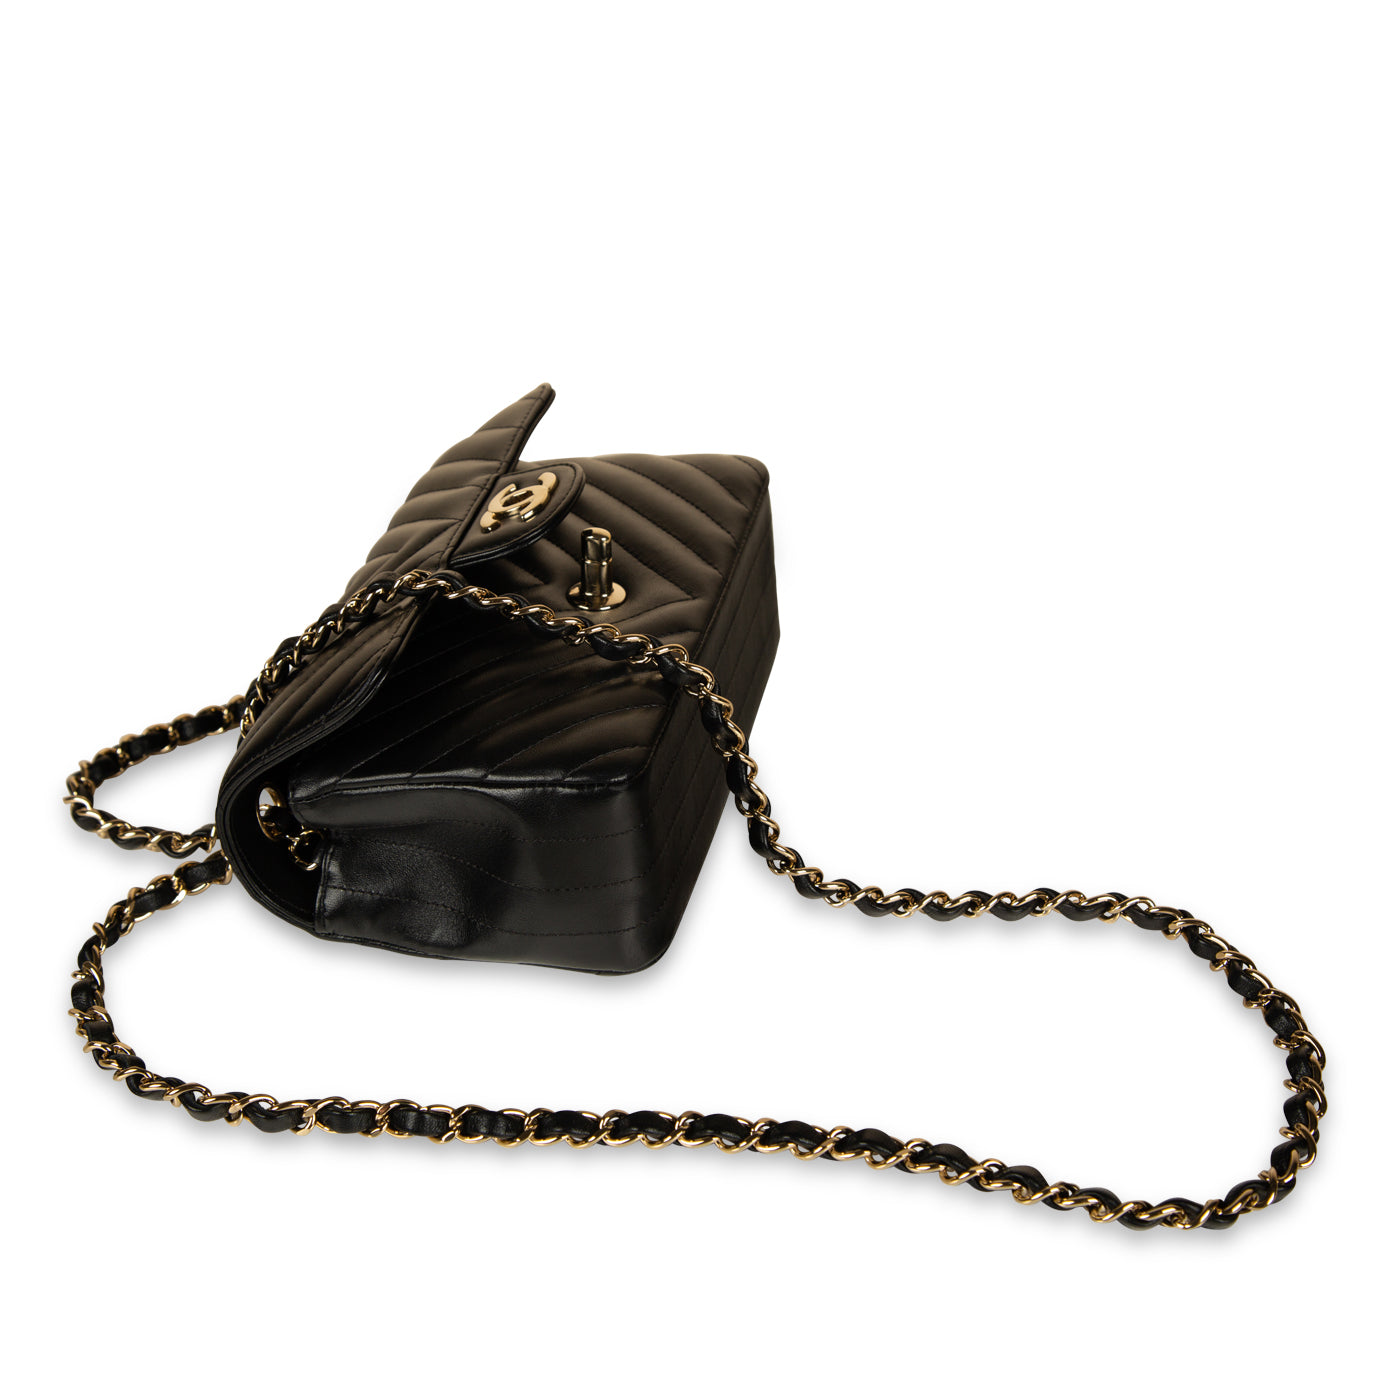 Classic Chanel Mini Flap in Black - BagButler